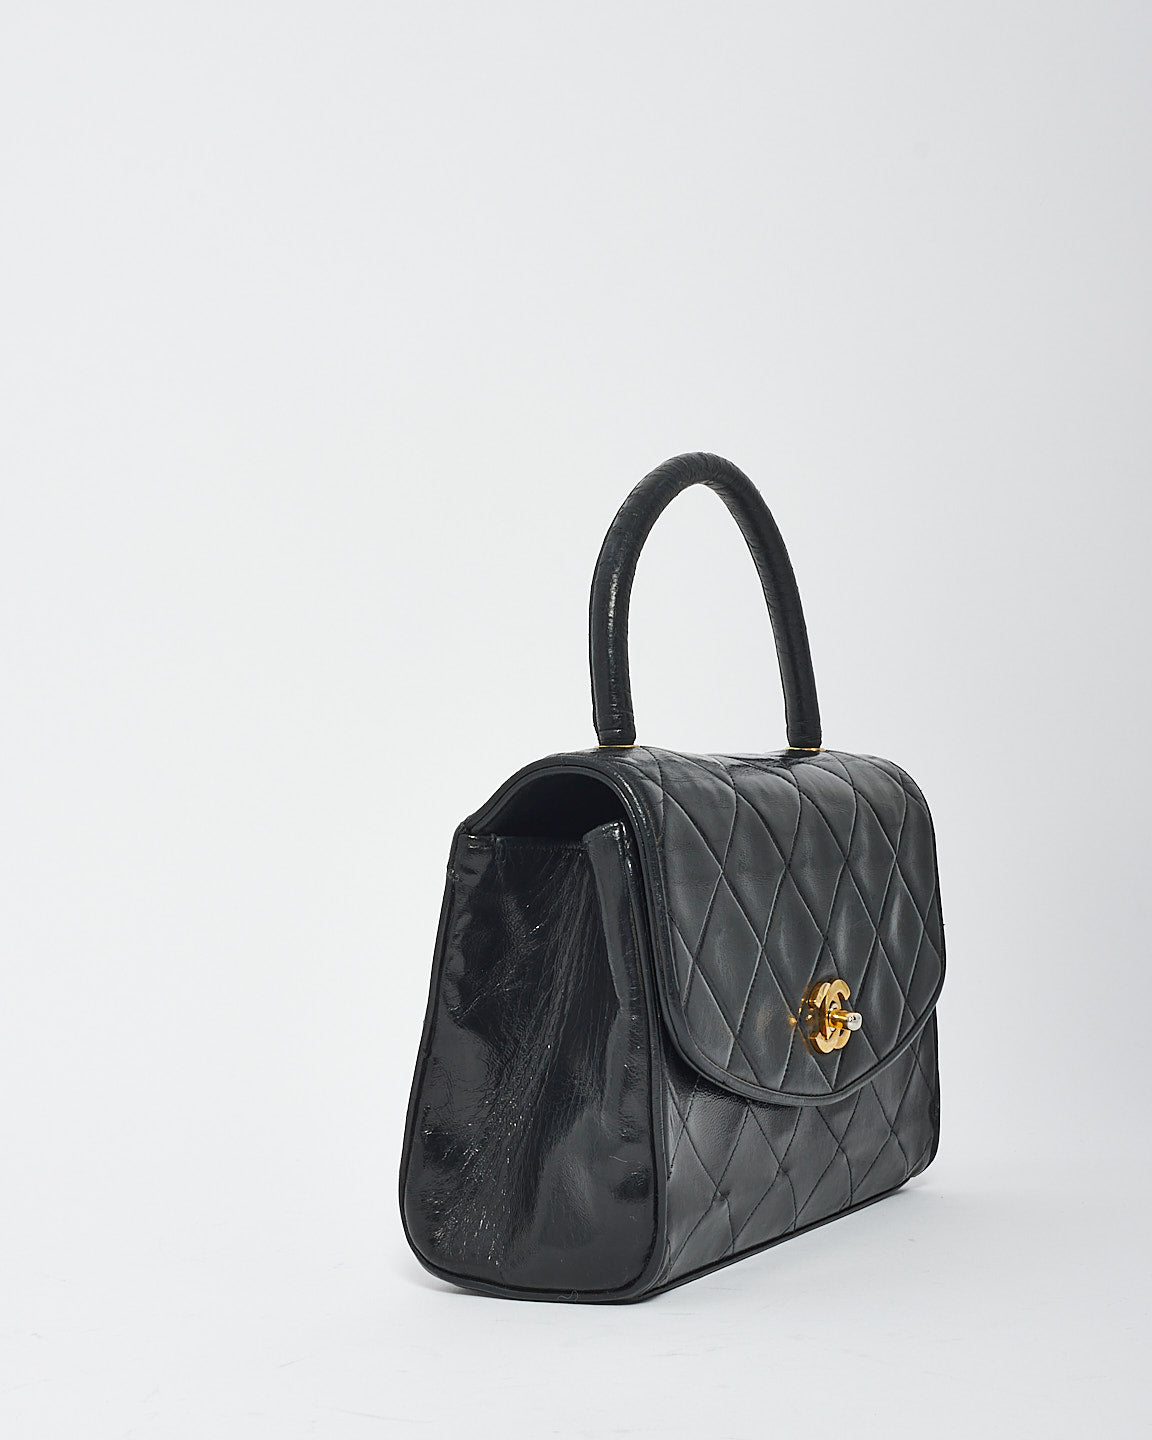 Chanel Vintage Black Lambskin Leather Kelly Bag